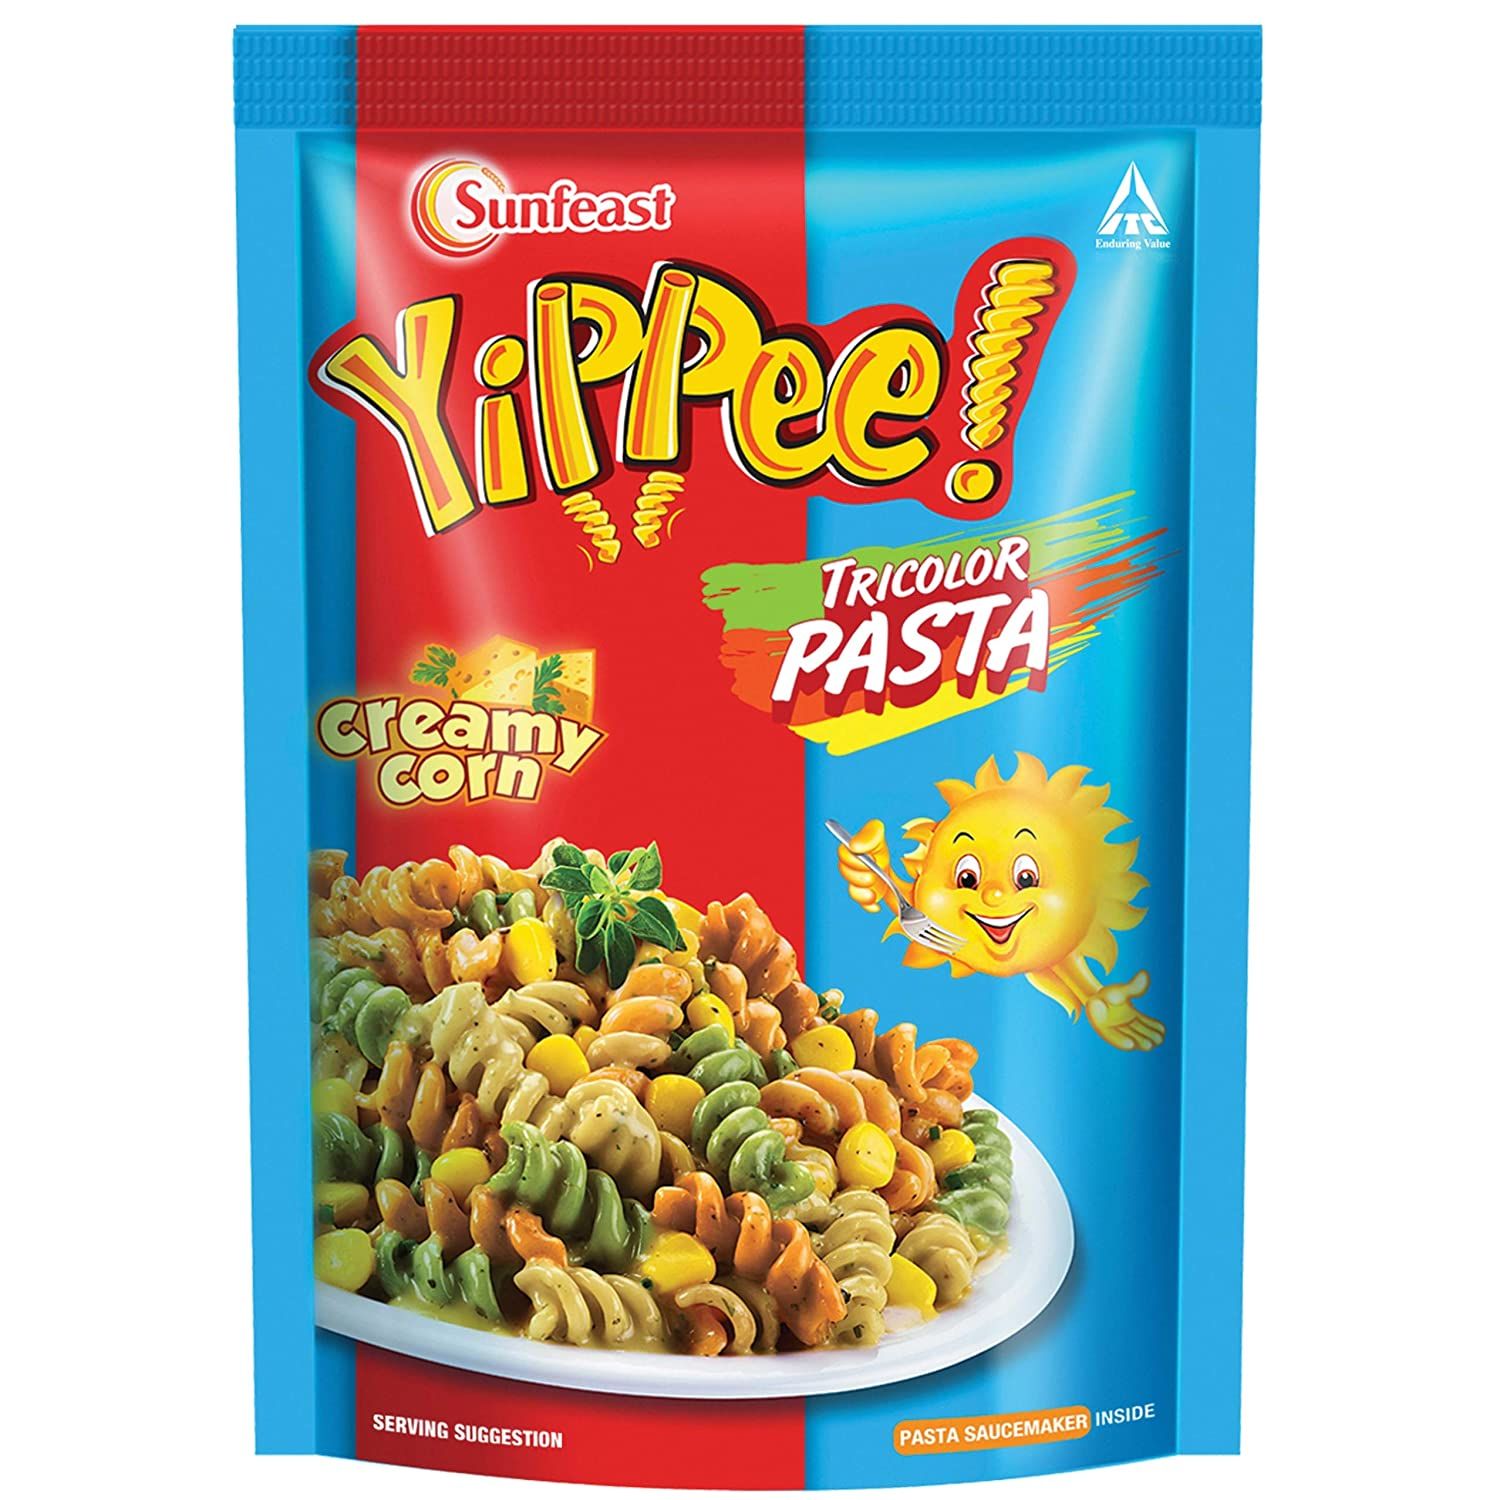 Sunfeast Yippee Tricolor Pasta Creamy Corn Image